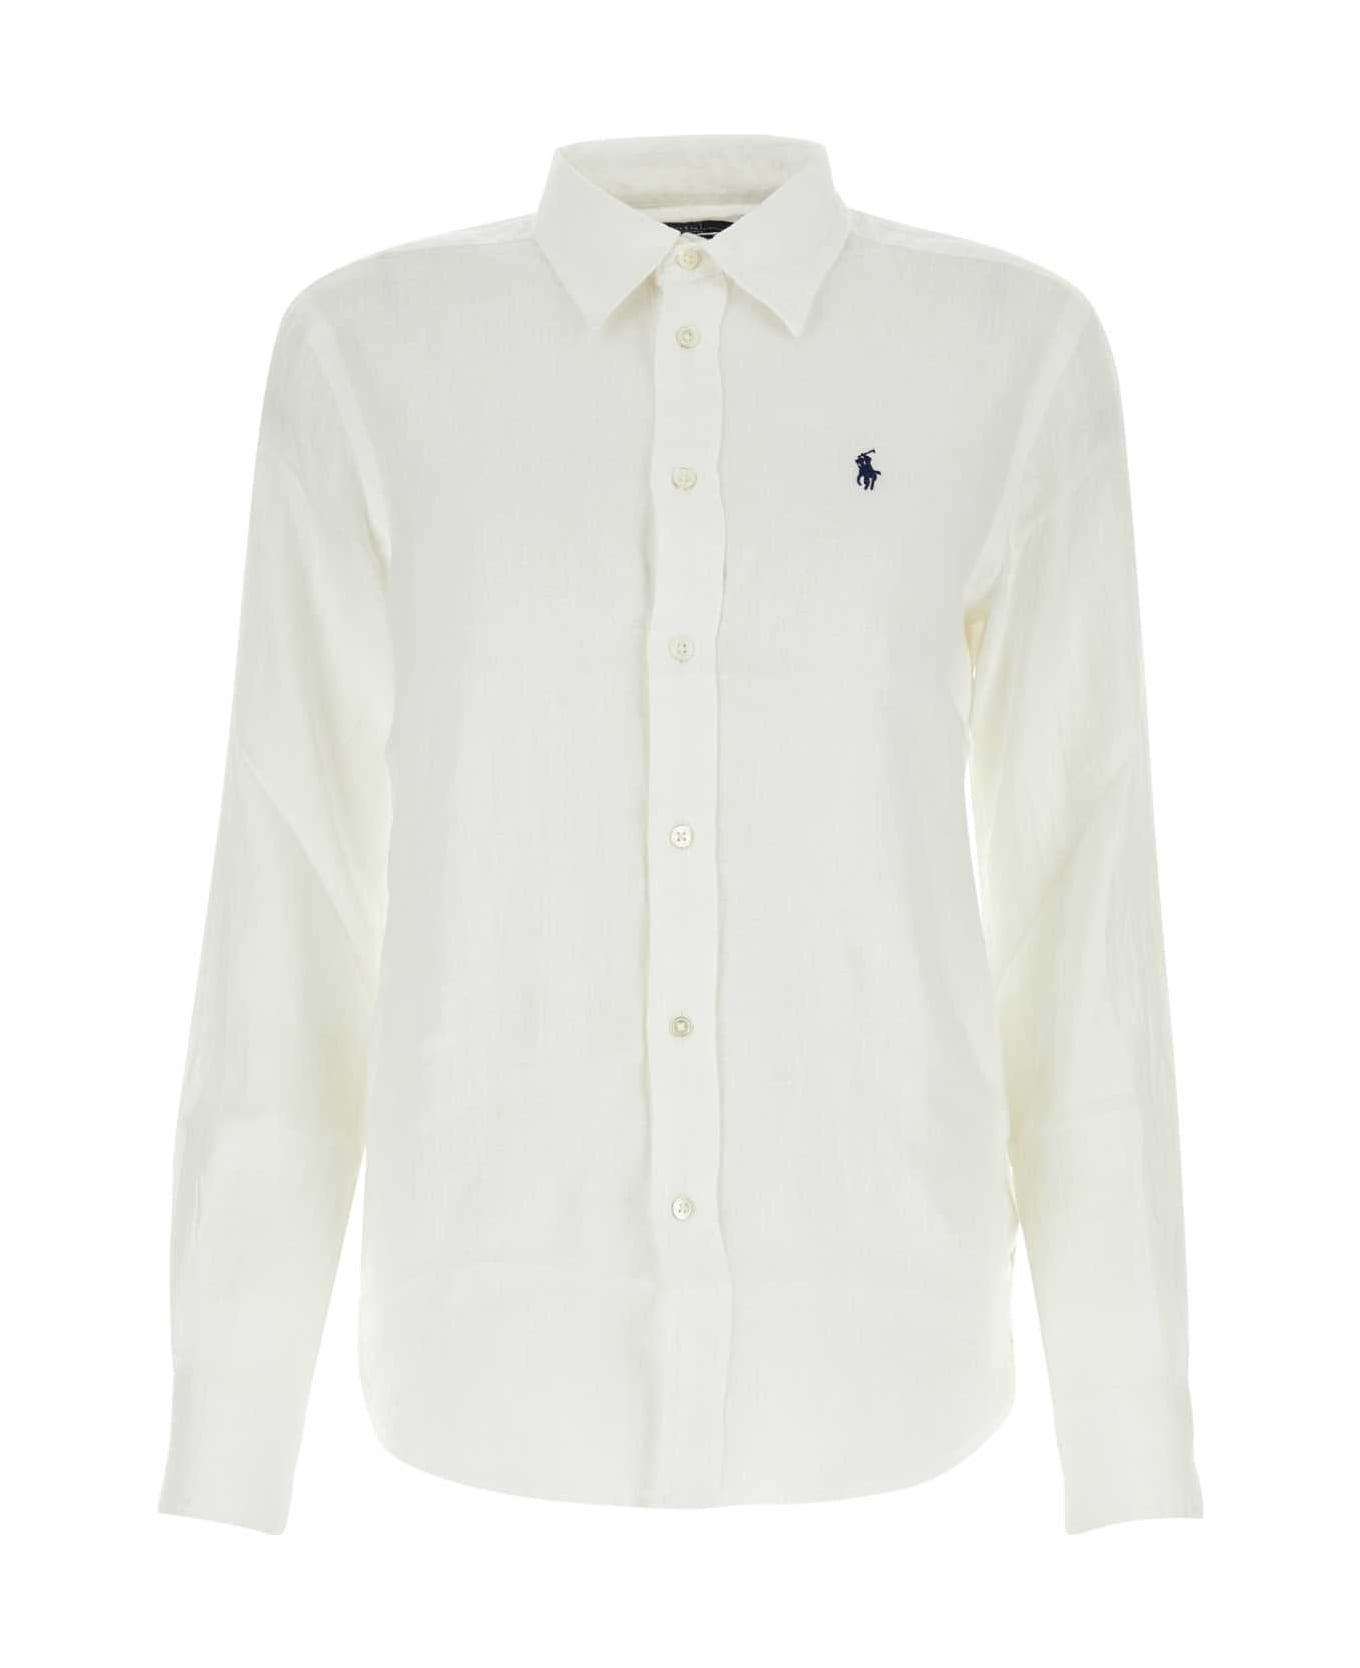 Polo Ralph Lauren White Linen Shirt - White